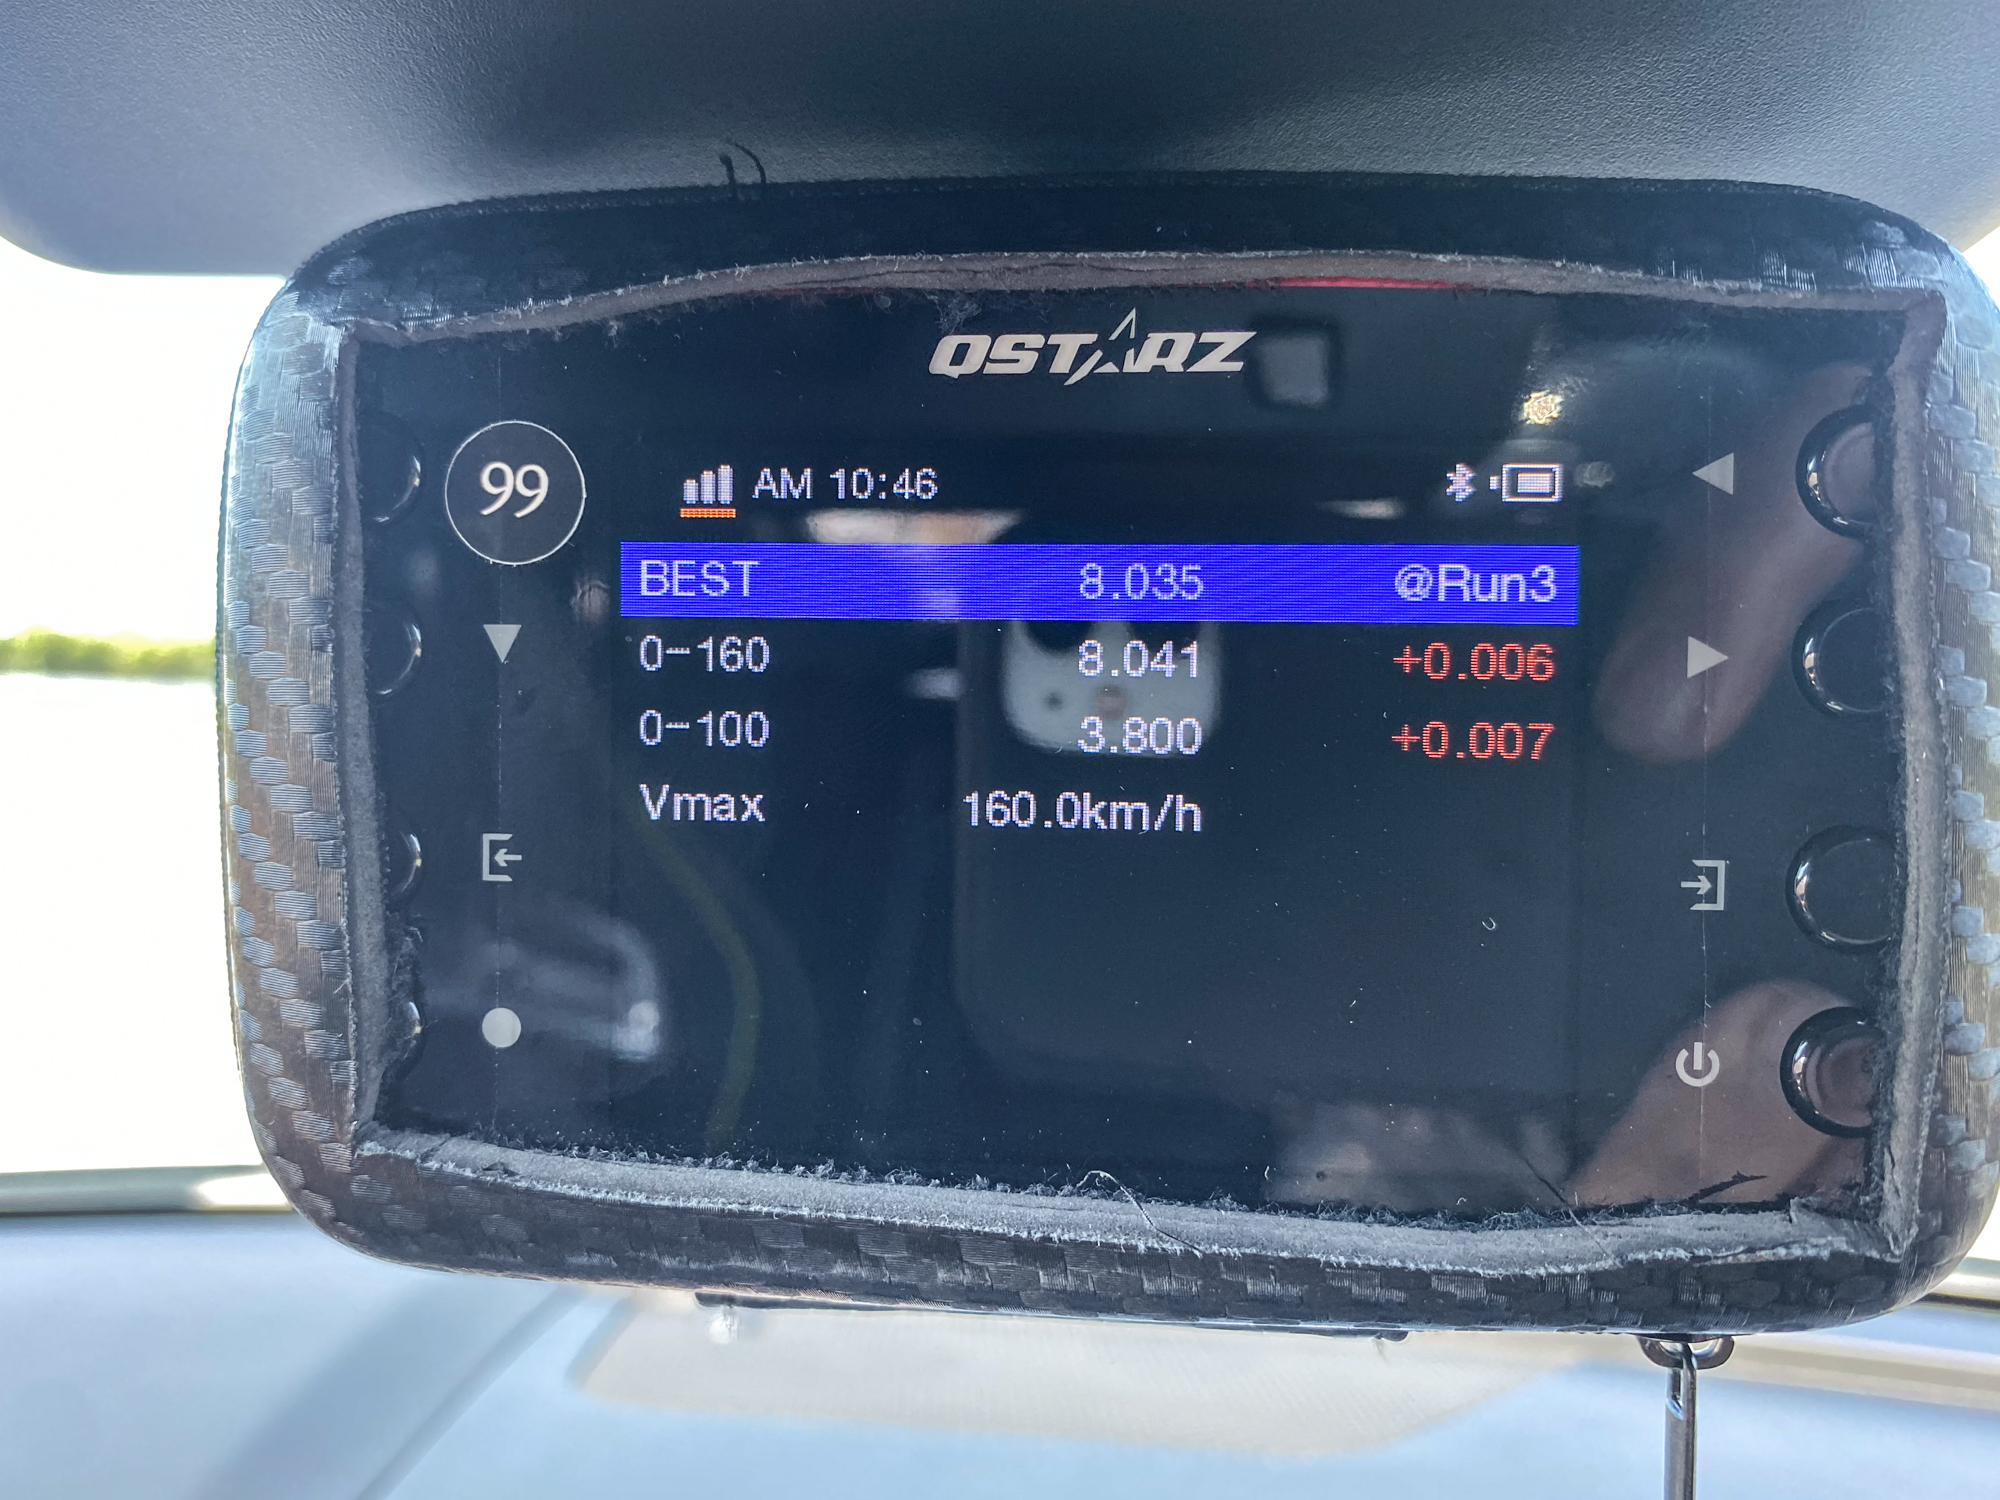 Qstarz數據清楚說明0-100km/h與0-160km/h的實測加速成績。